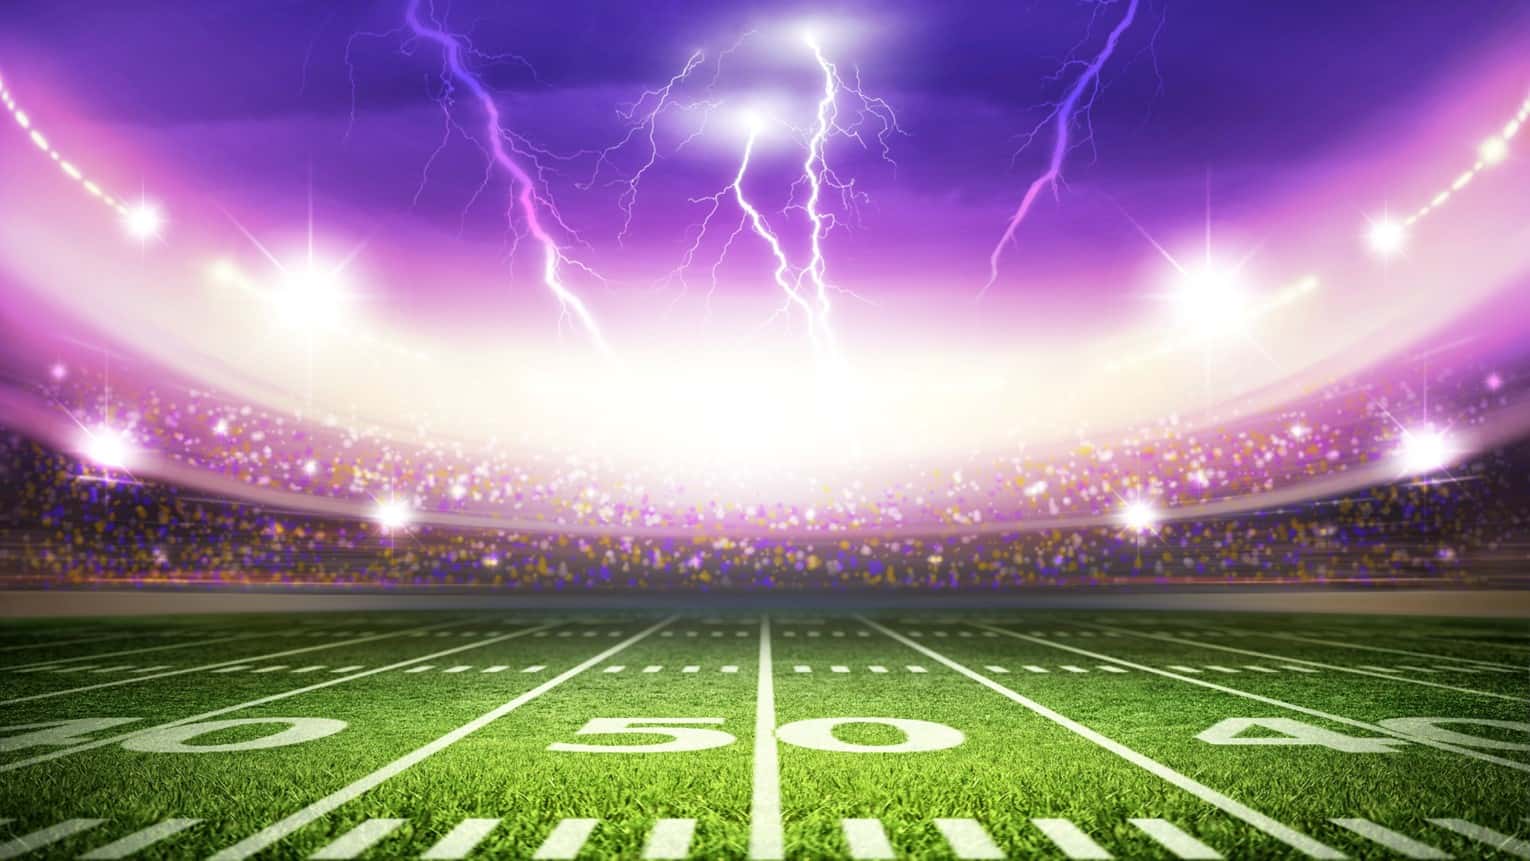 football field with purple sky and lightening